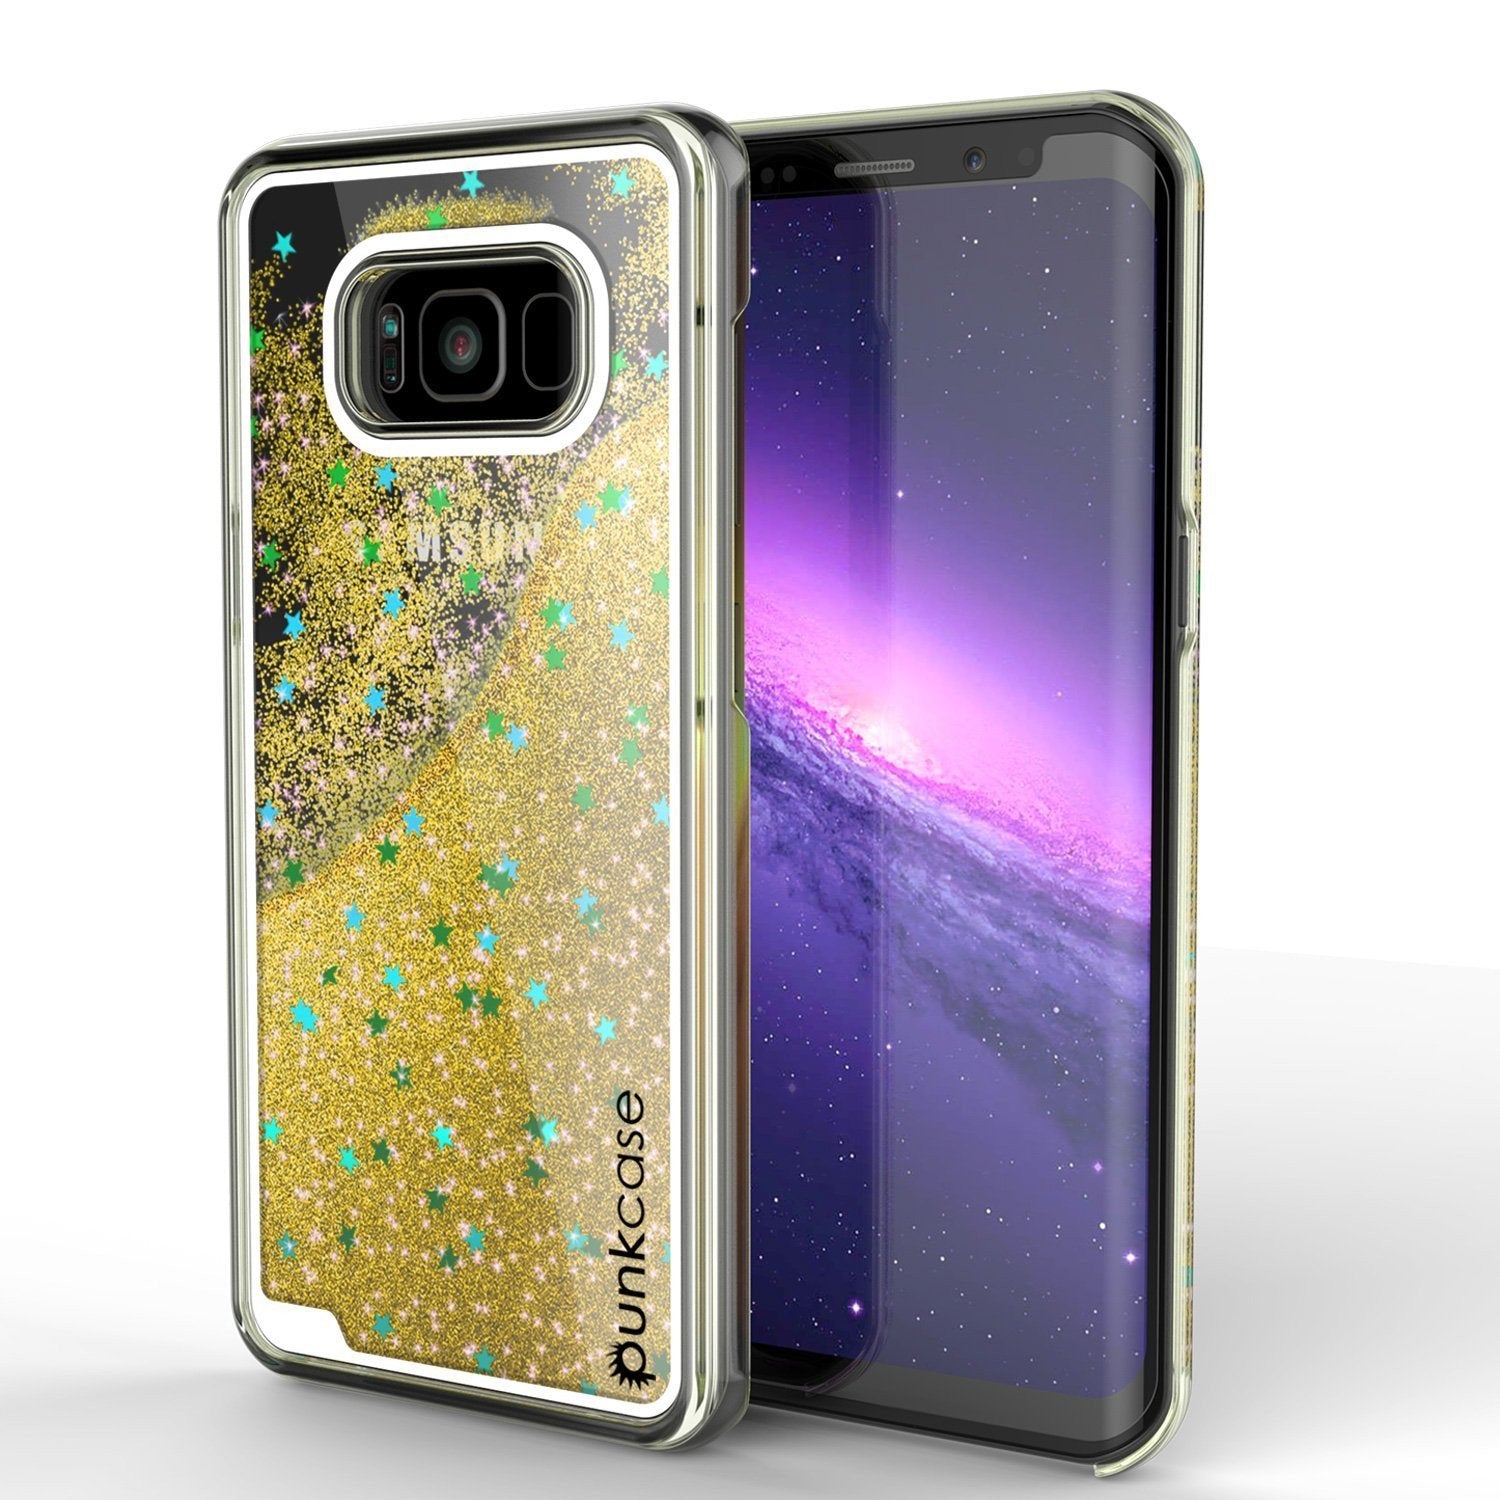 Galaxy S8 Plus Dual-Layer Screen Protective Glitter Case [Gold]